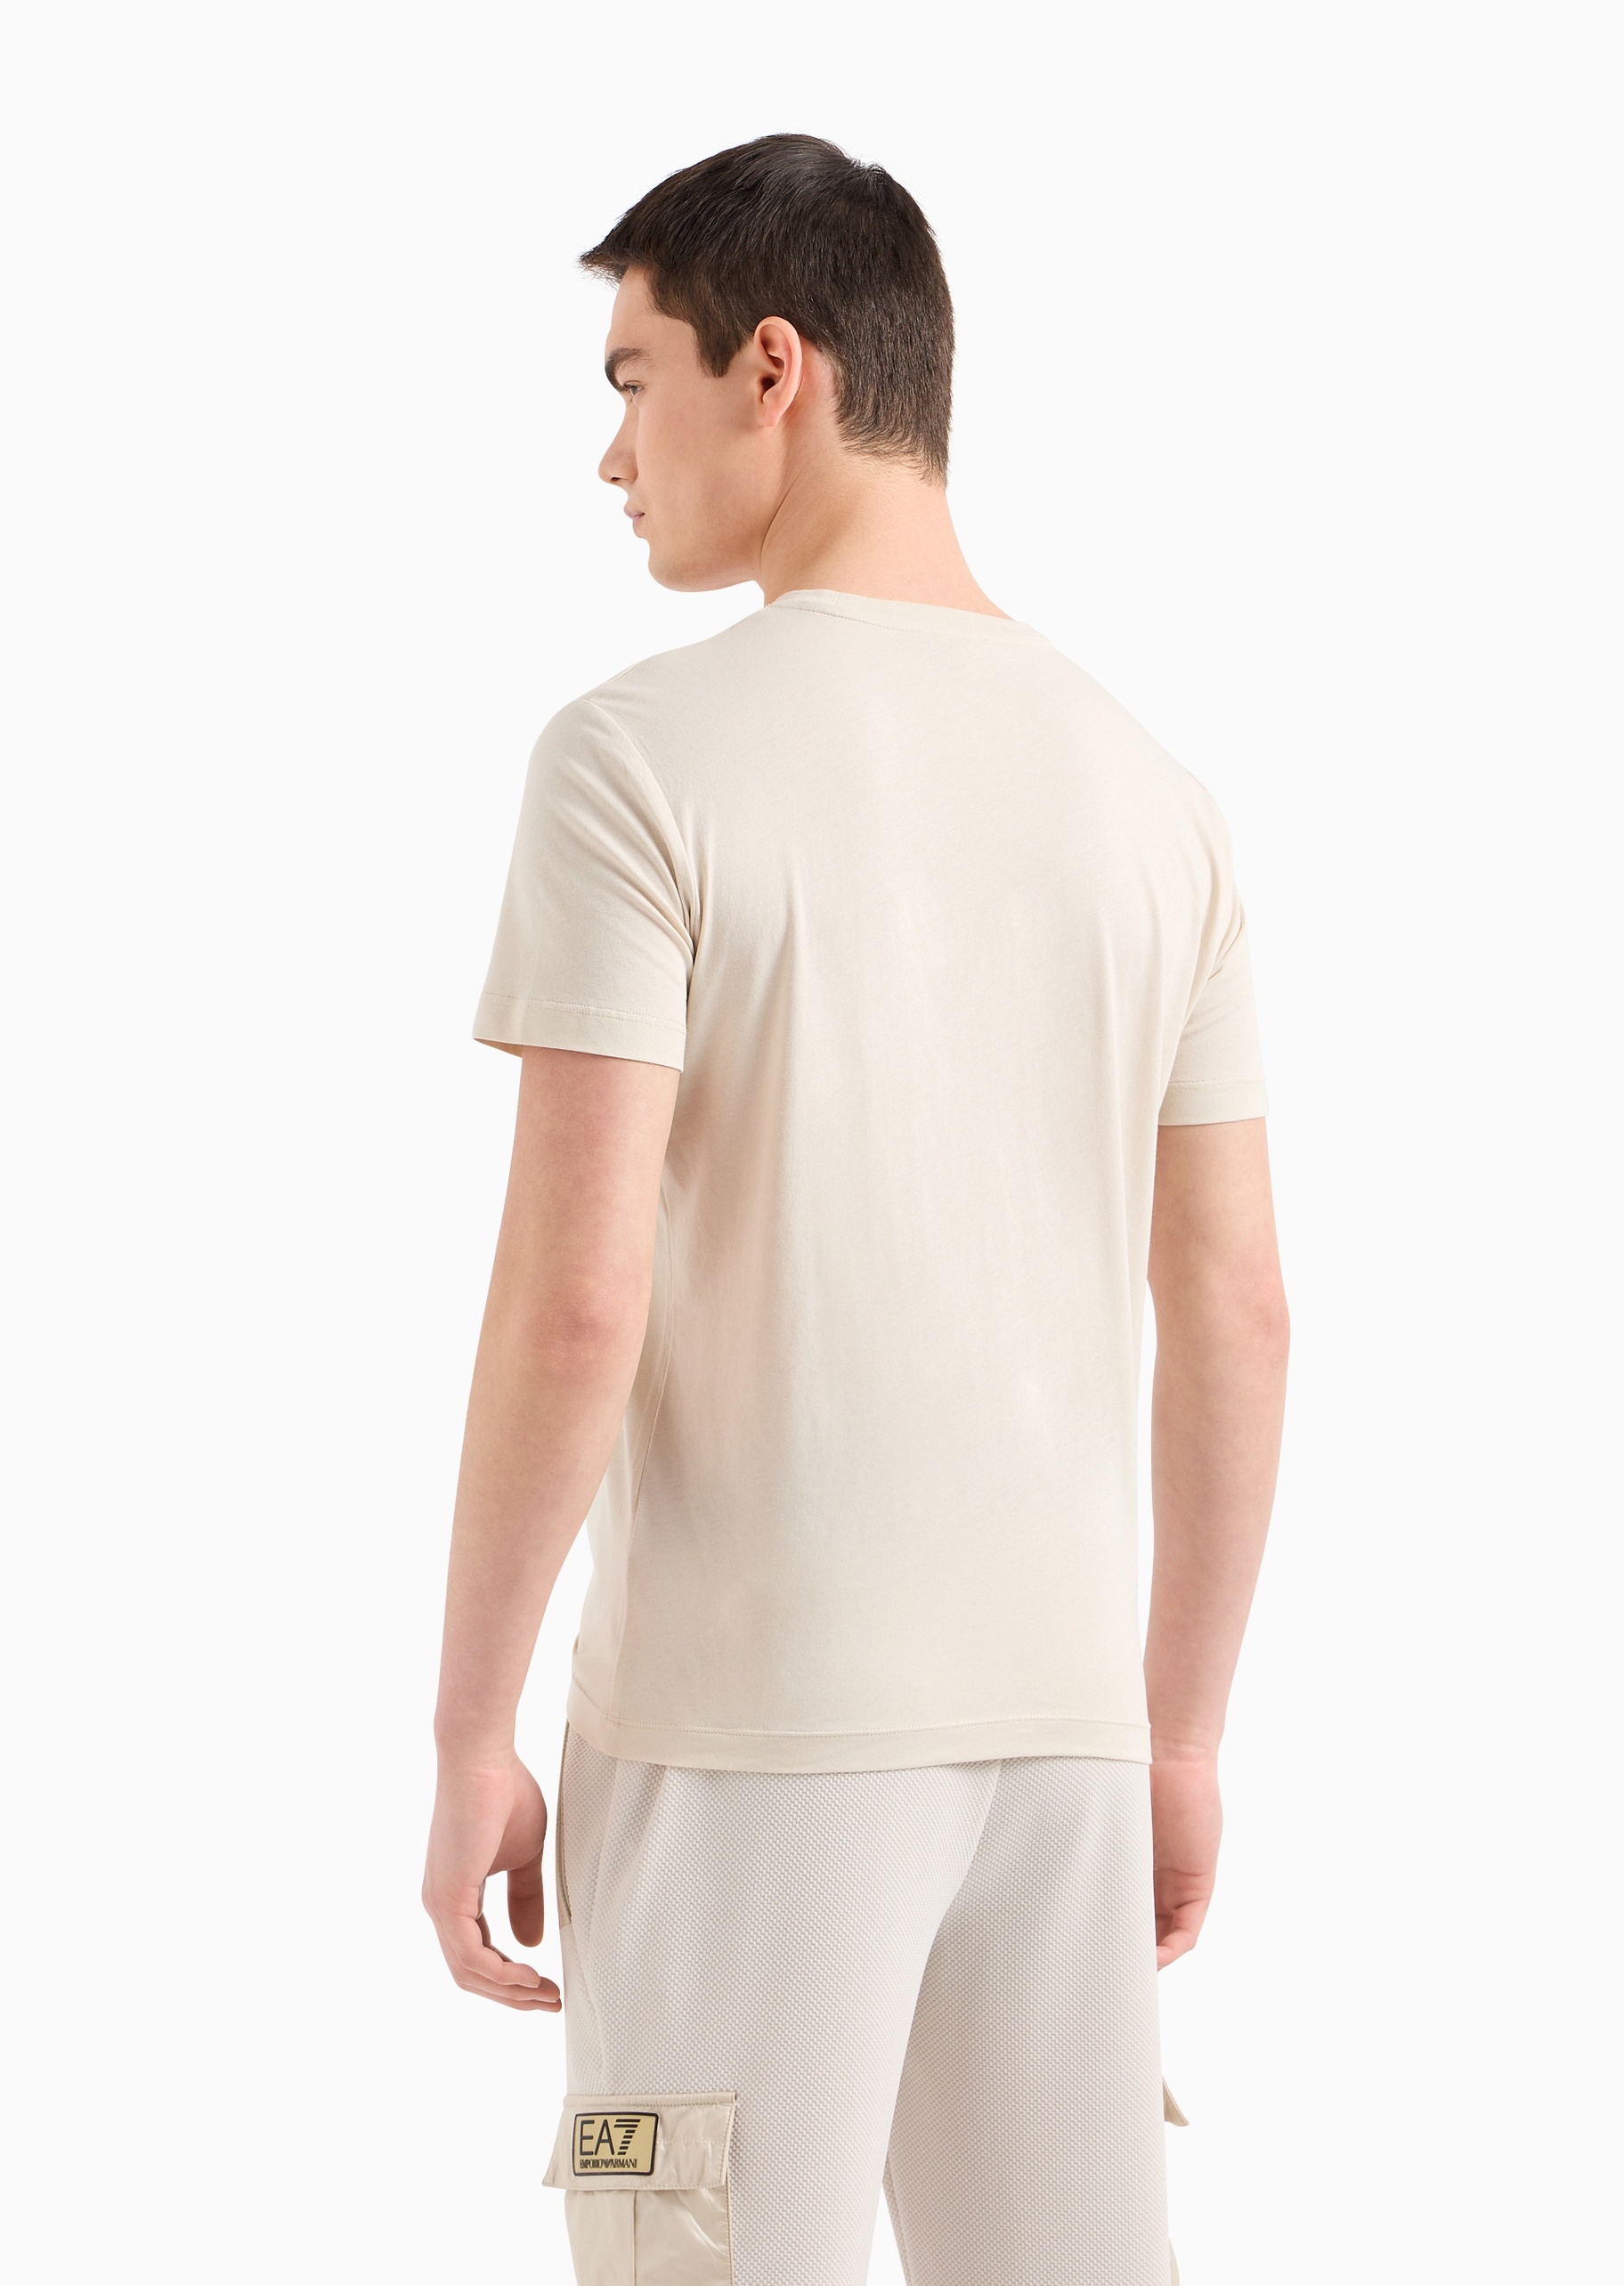 EA7 男士全棉合身短袖圆领健身训练T恤